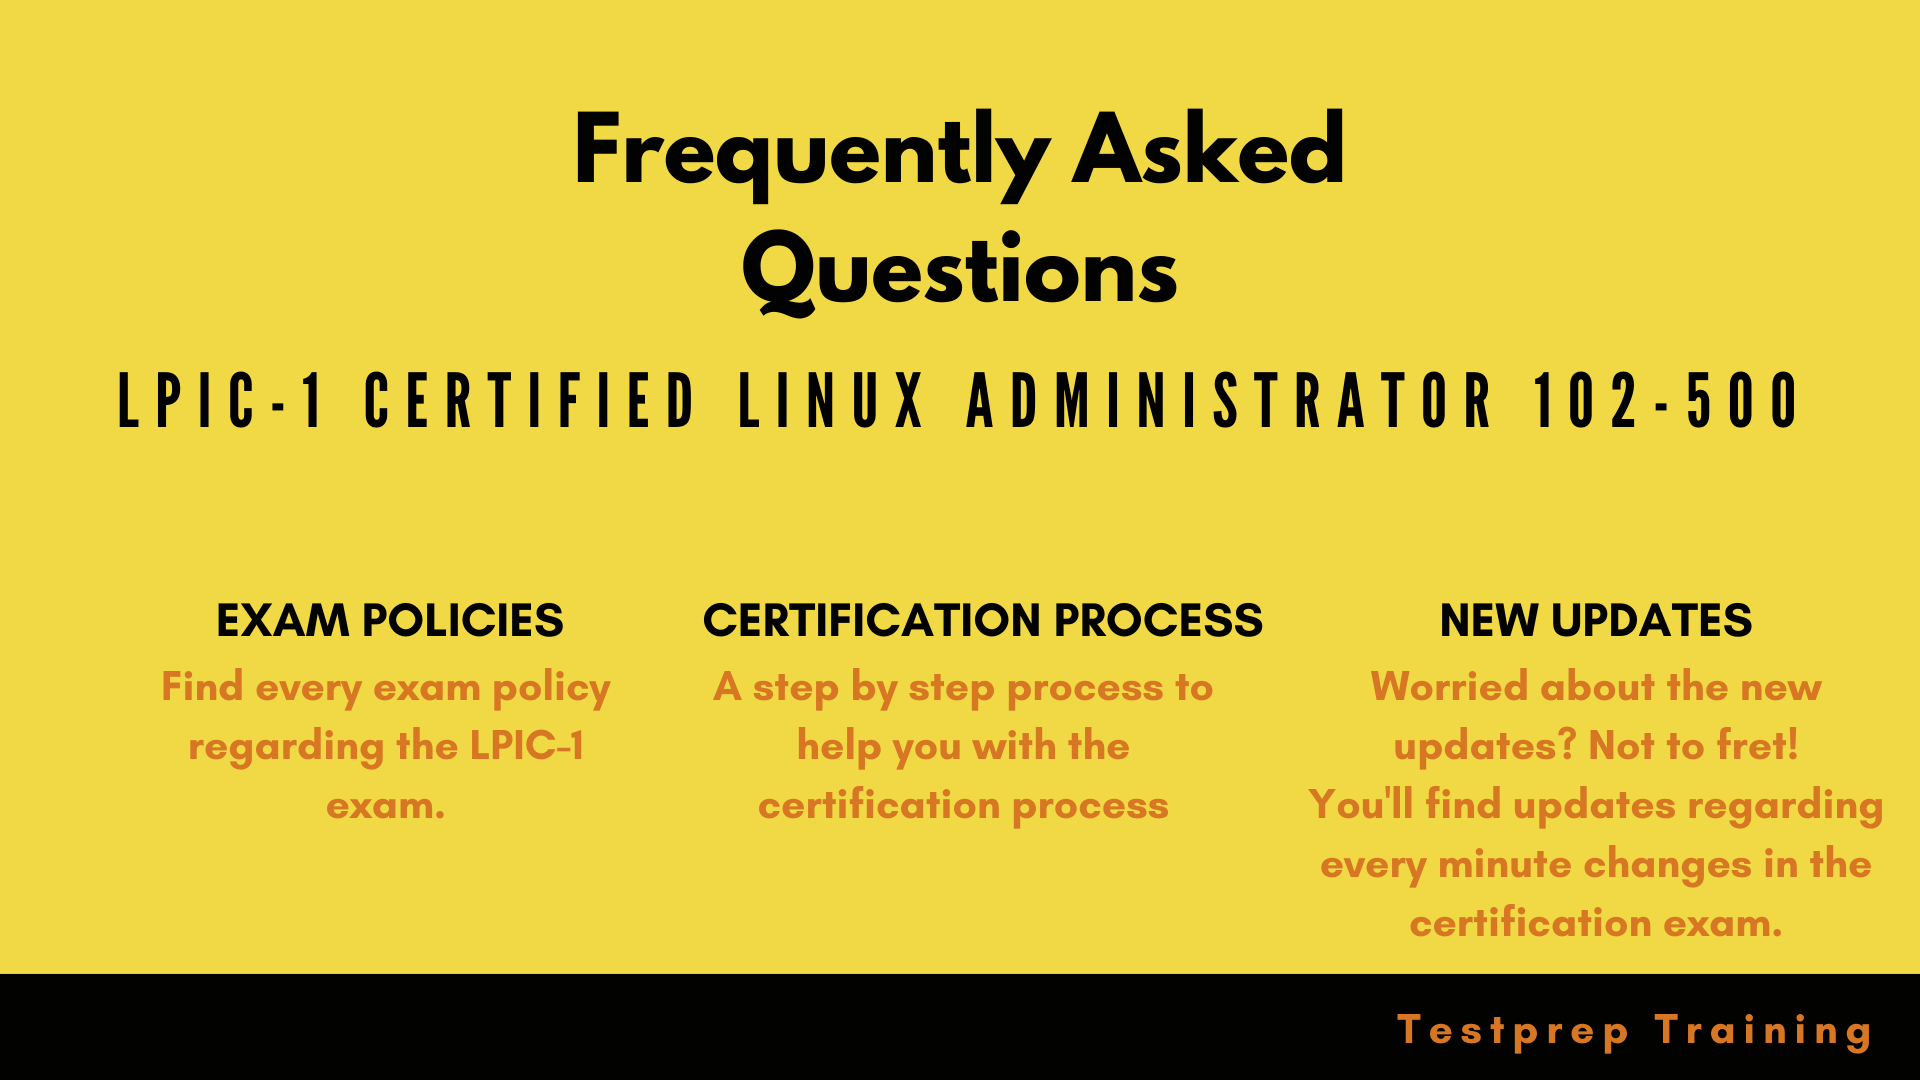 LPIC-1 Certified Linux Administrator 102-500 Exam FAQ